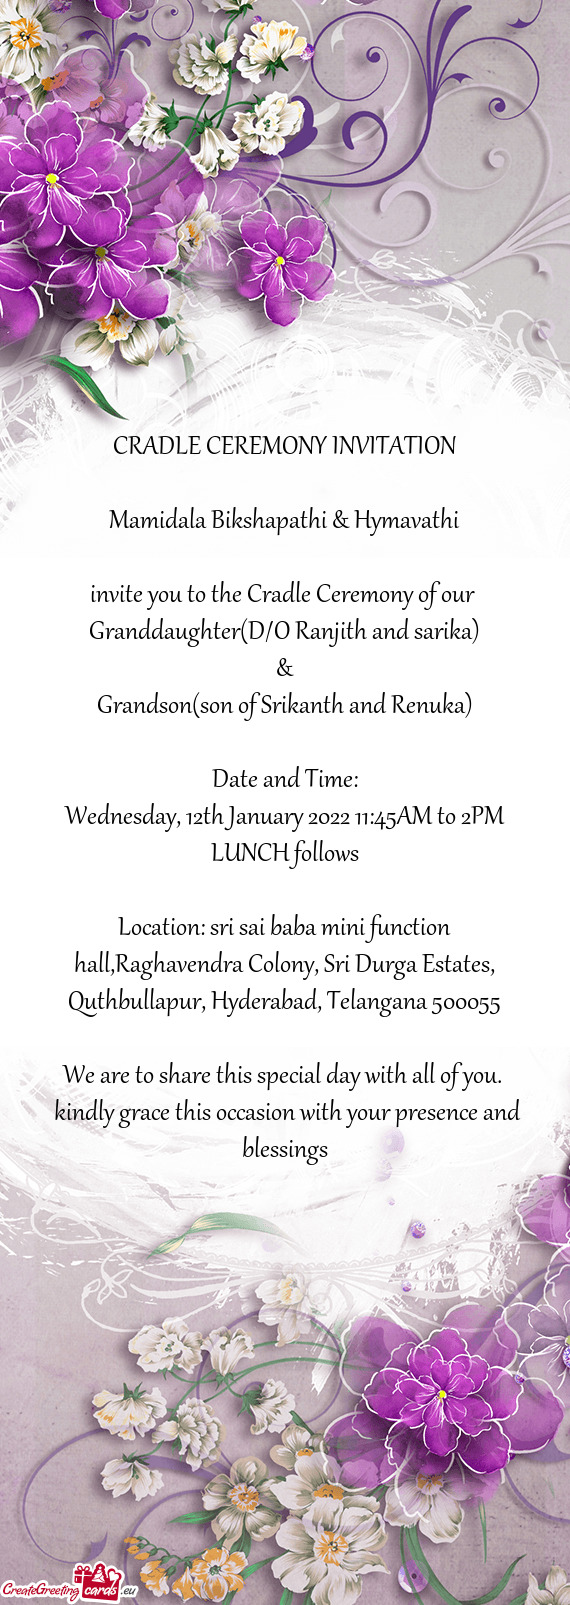 CRADLE CEREMONY INVITATION
 
 Mamidala Bikshapathi & Hymavathi
 
 invite you to the Cradle Ceremony